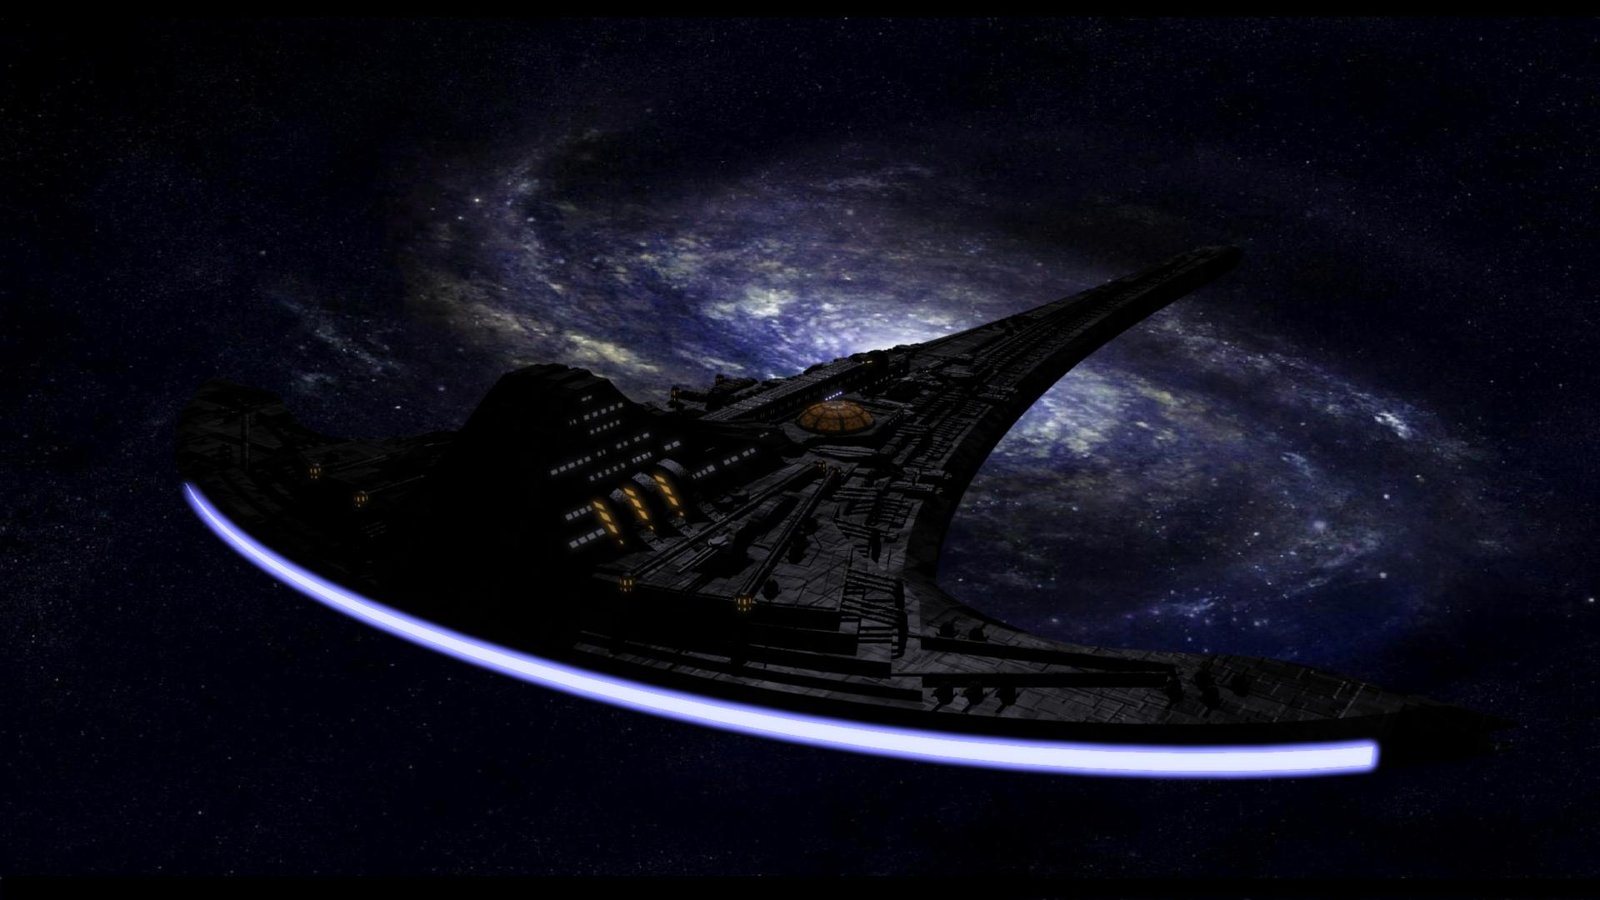 Stargate HD Wallpaper X